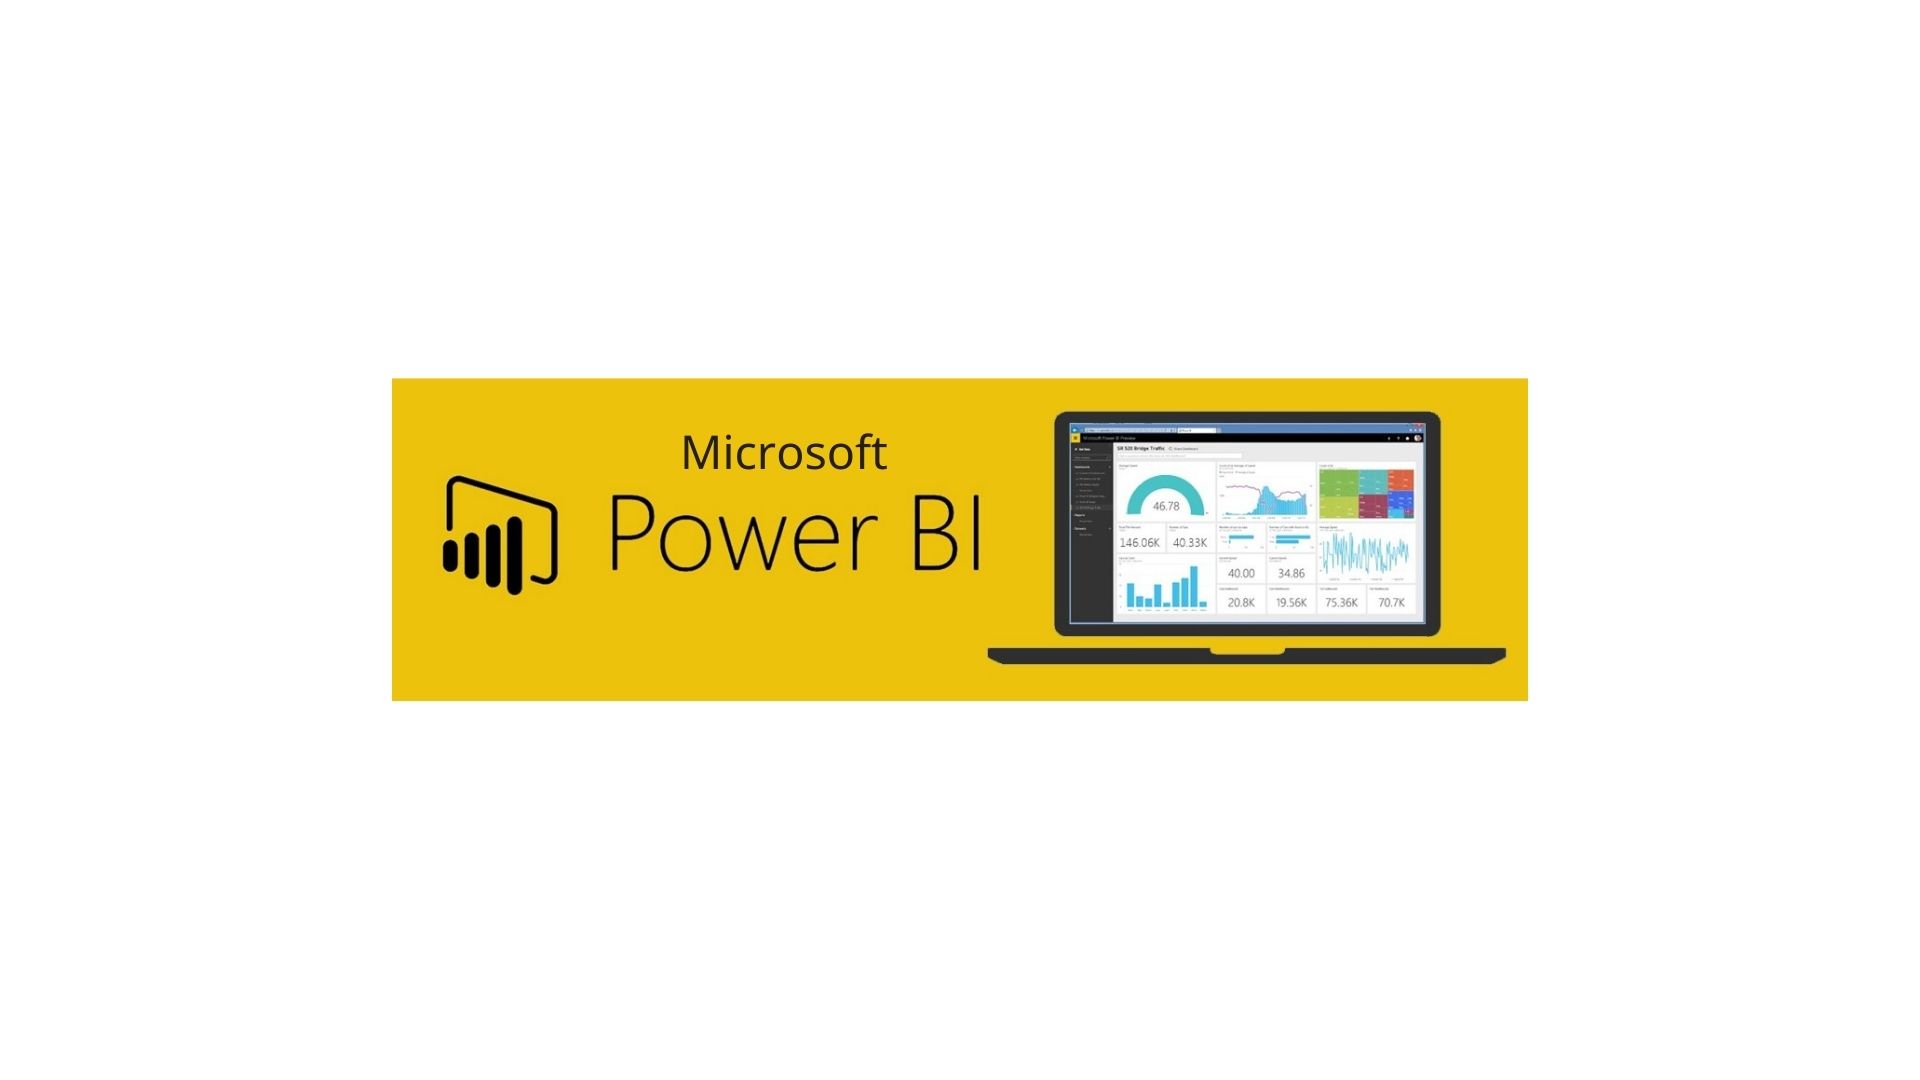 Microsoft Power BI sign